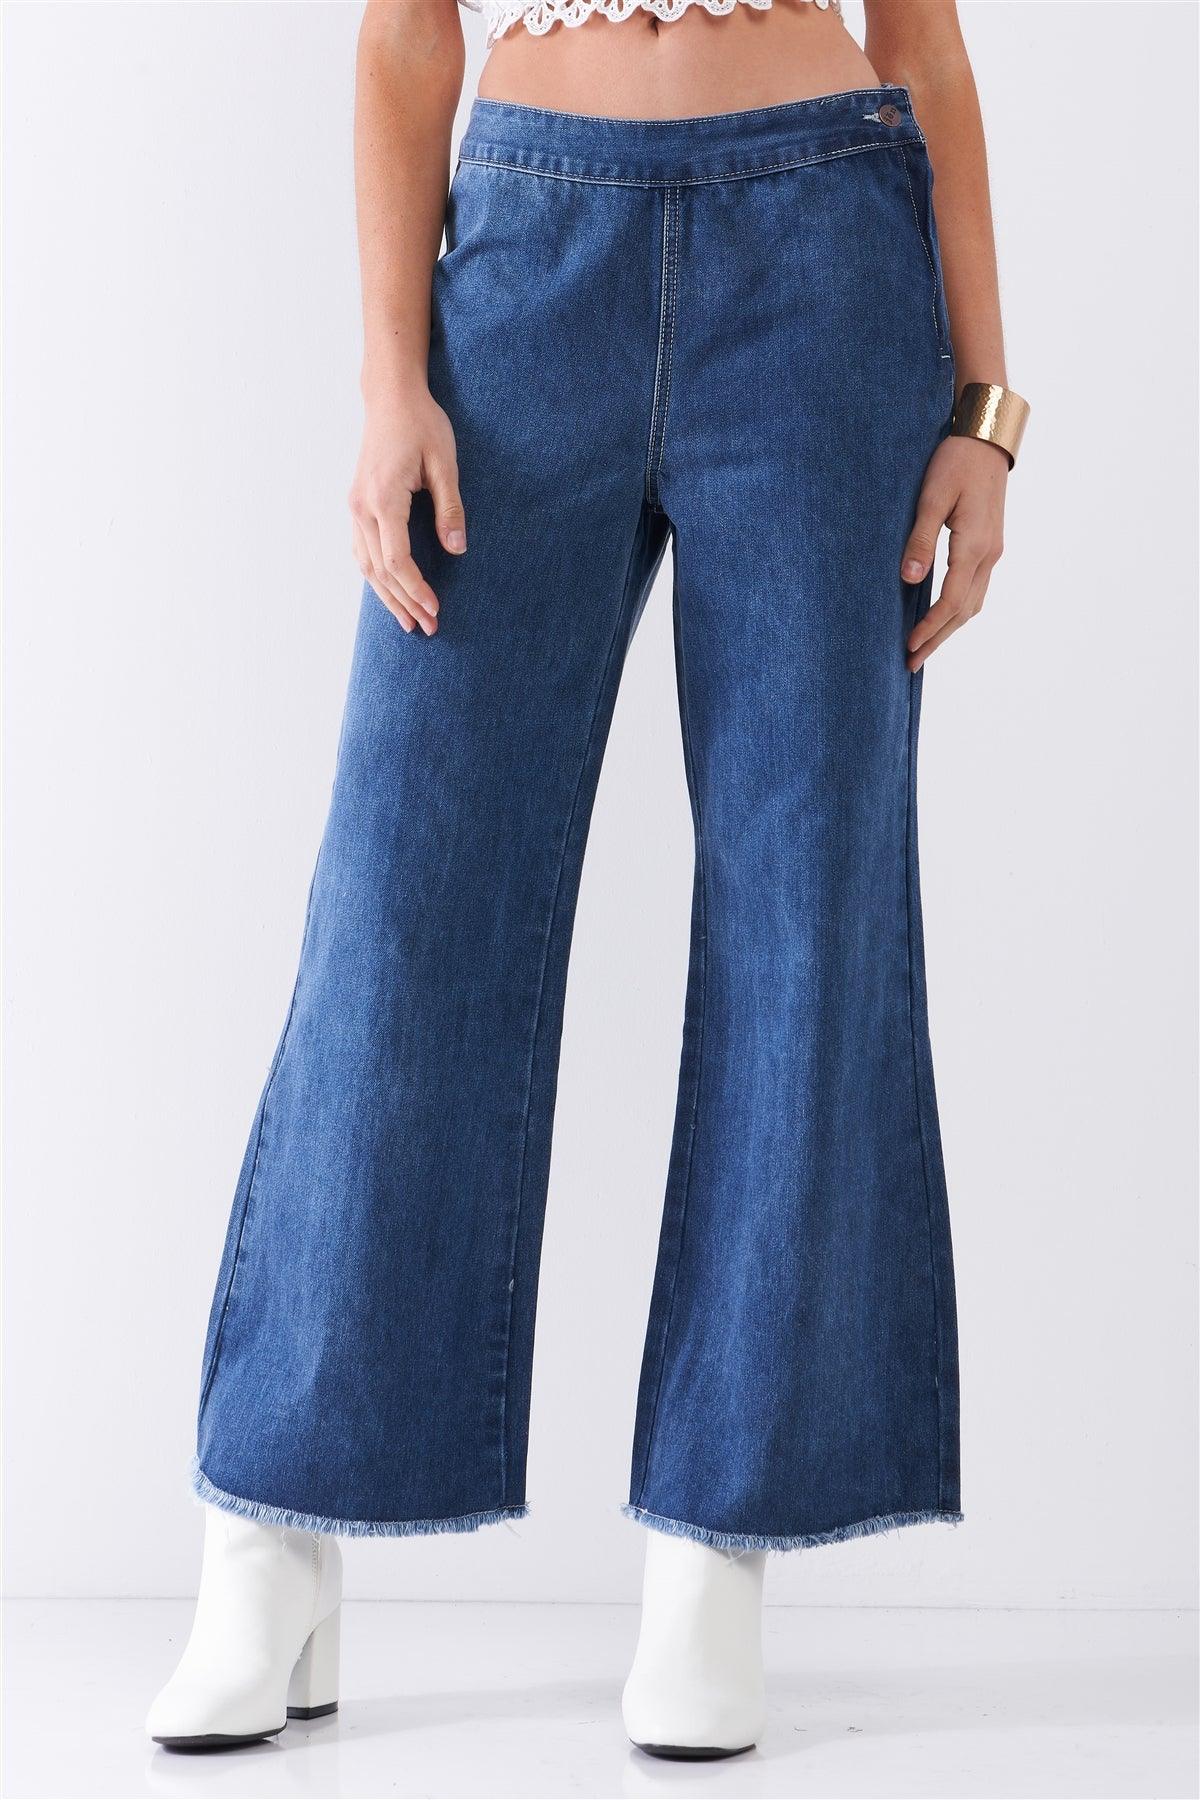 Dark Blue Denim Low-Rise Raw Hem Detail Side Zip-Up Basic Flare Jean Pants /1-1-2-2-1-1